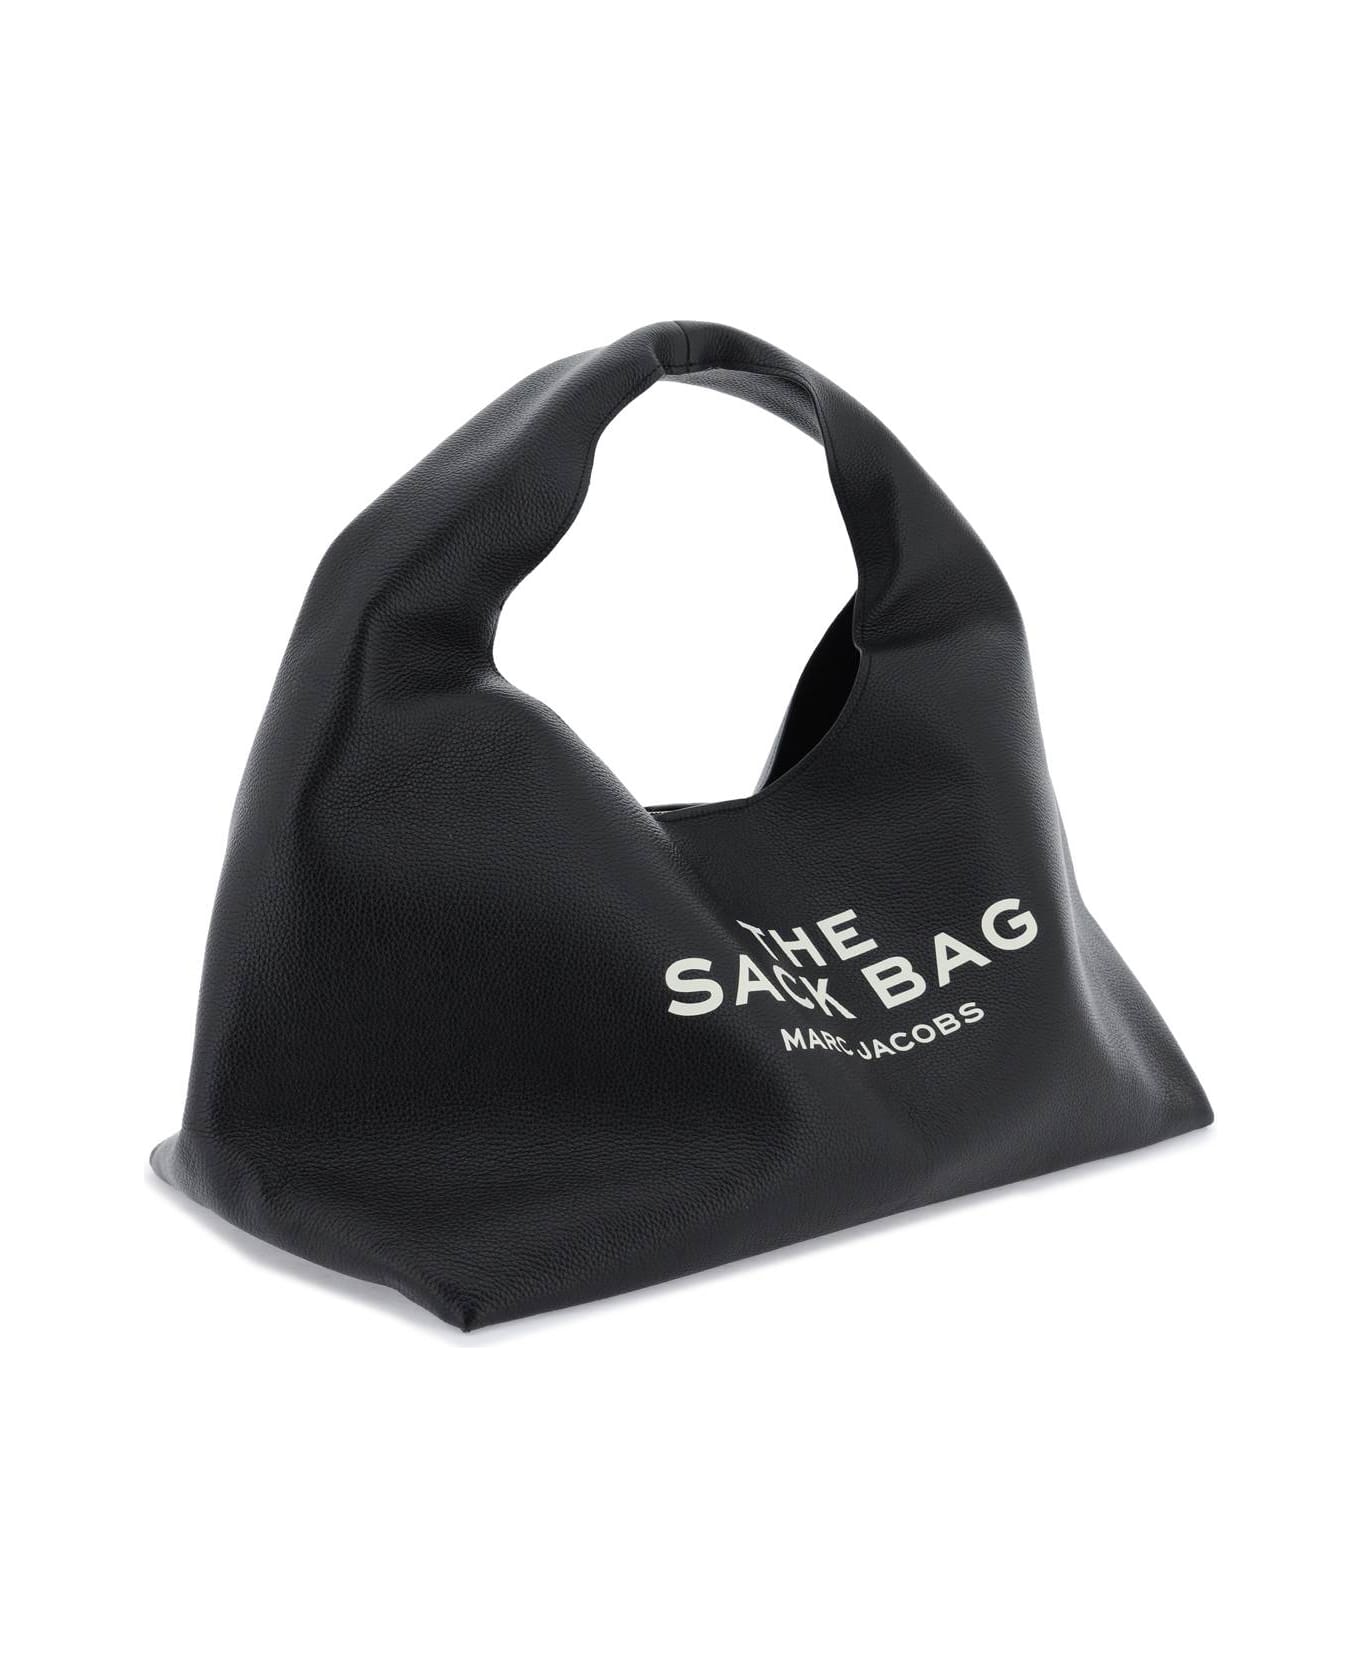 Marc Jacobs The Xl Sack Bag - Black